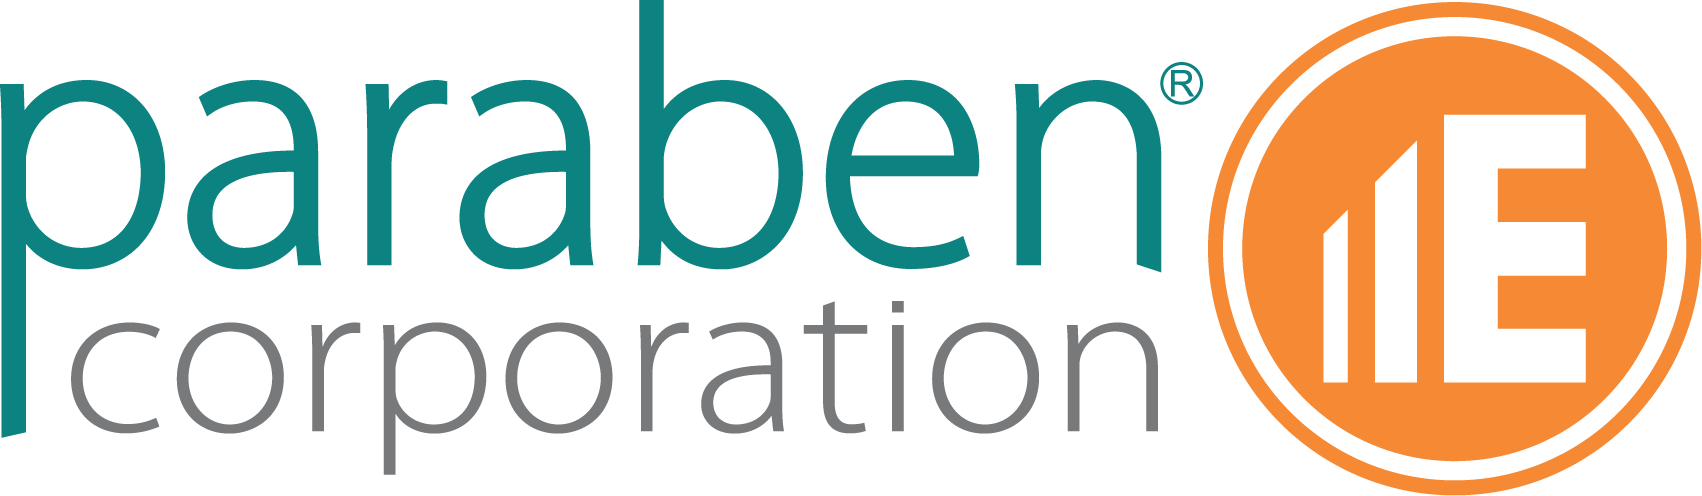 paraben-corporation_logo